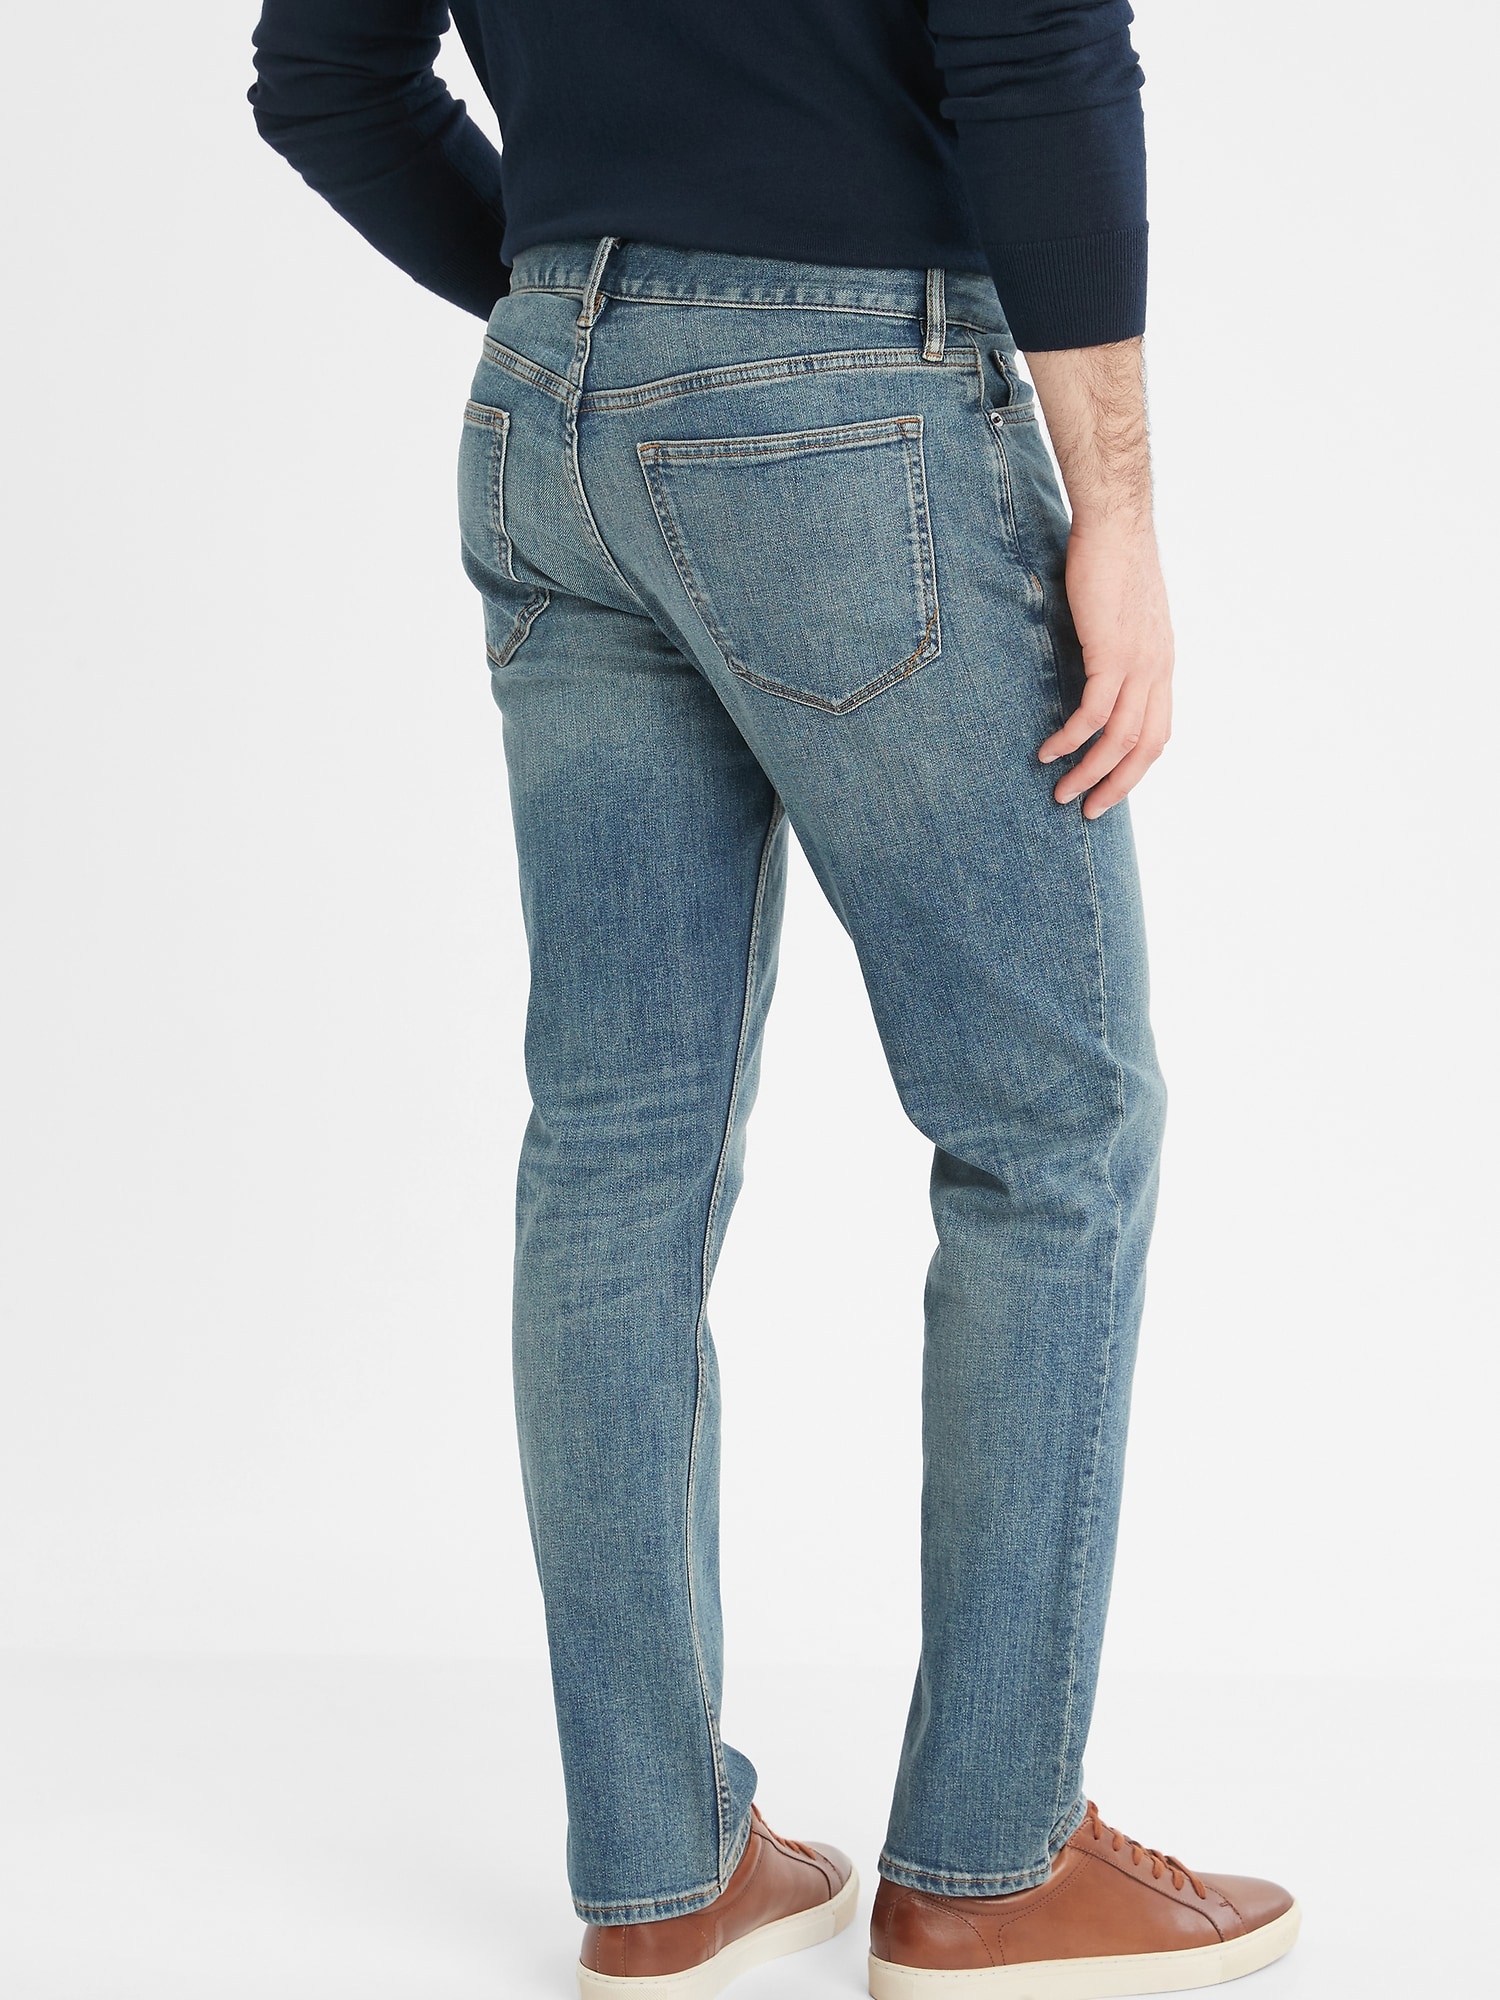 Slim-Fit Stretch Vintage Wash Jean